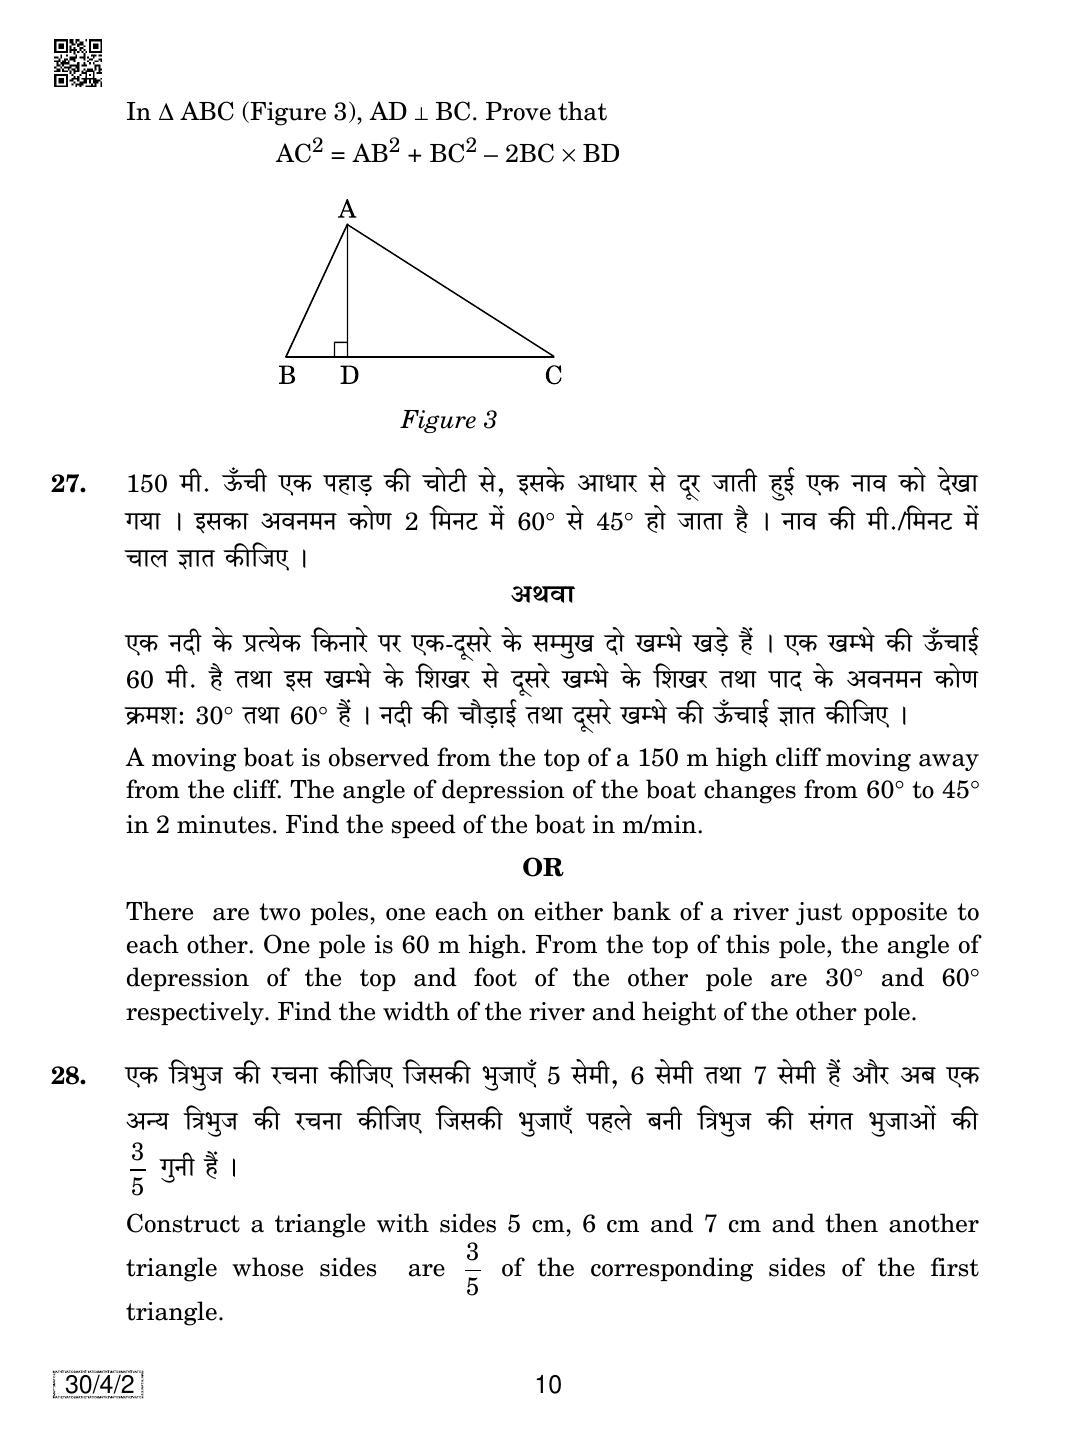 CBSE Class 10 Maths (30/4/2 - SET 2) 2019 Question Paper - Page 10